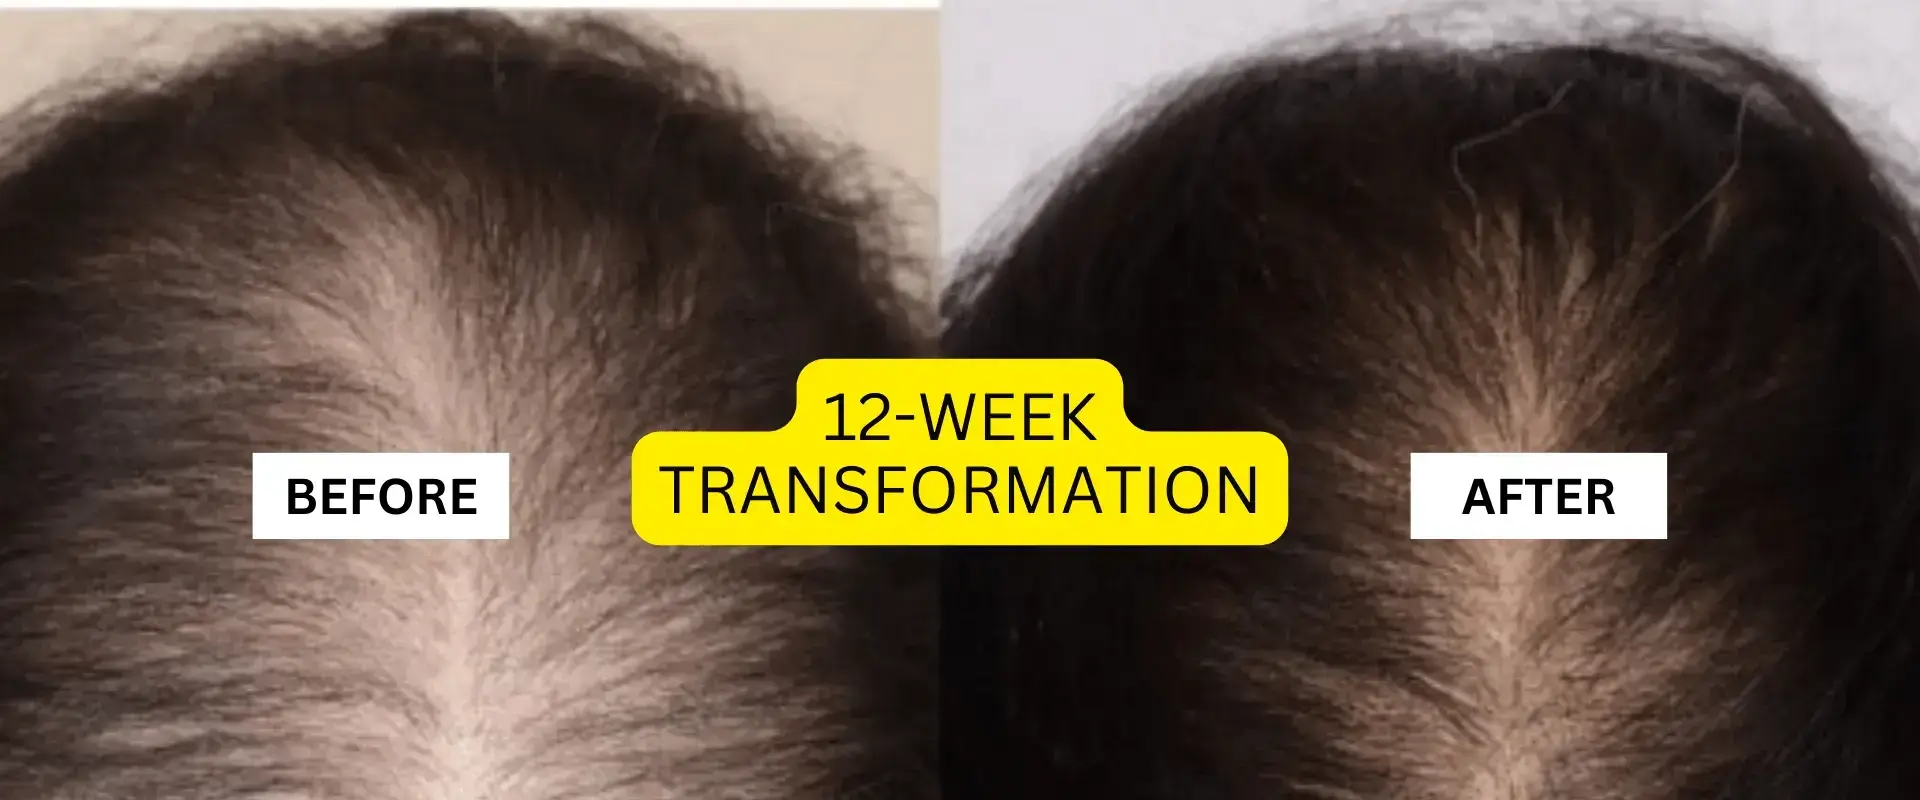 recure 12 week transformation